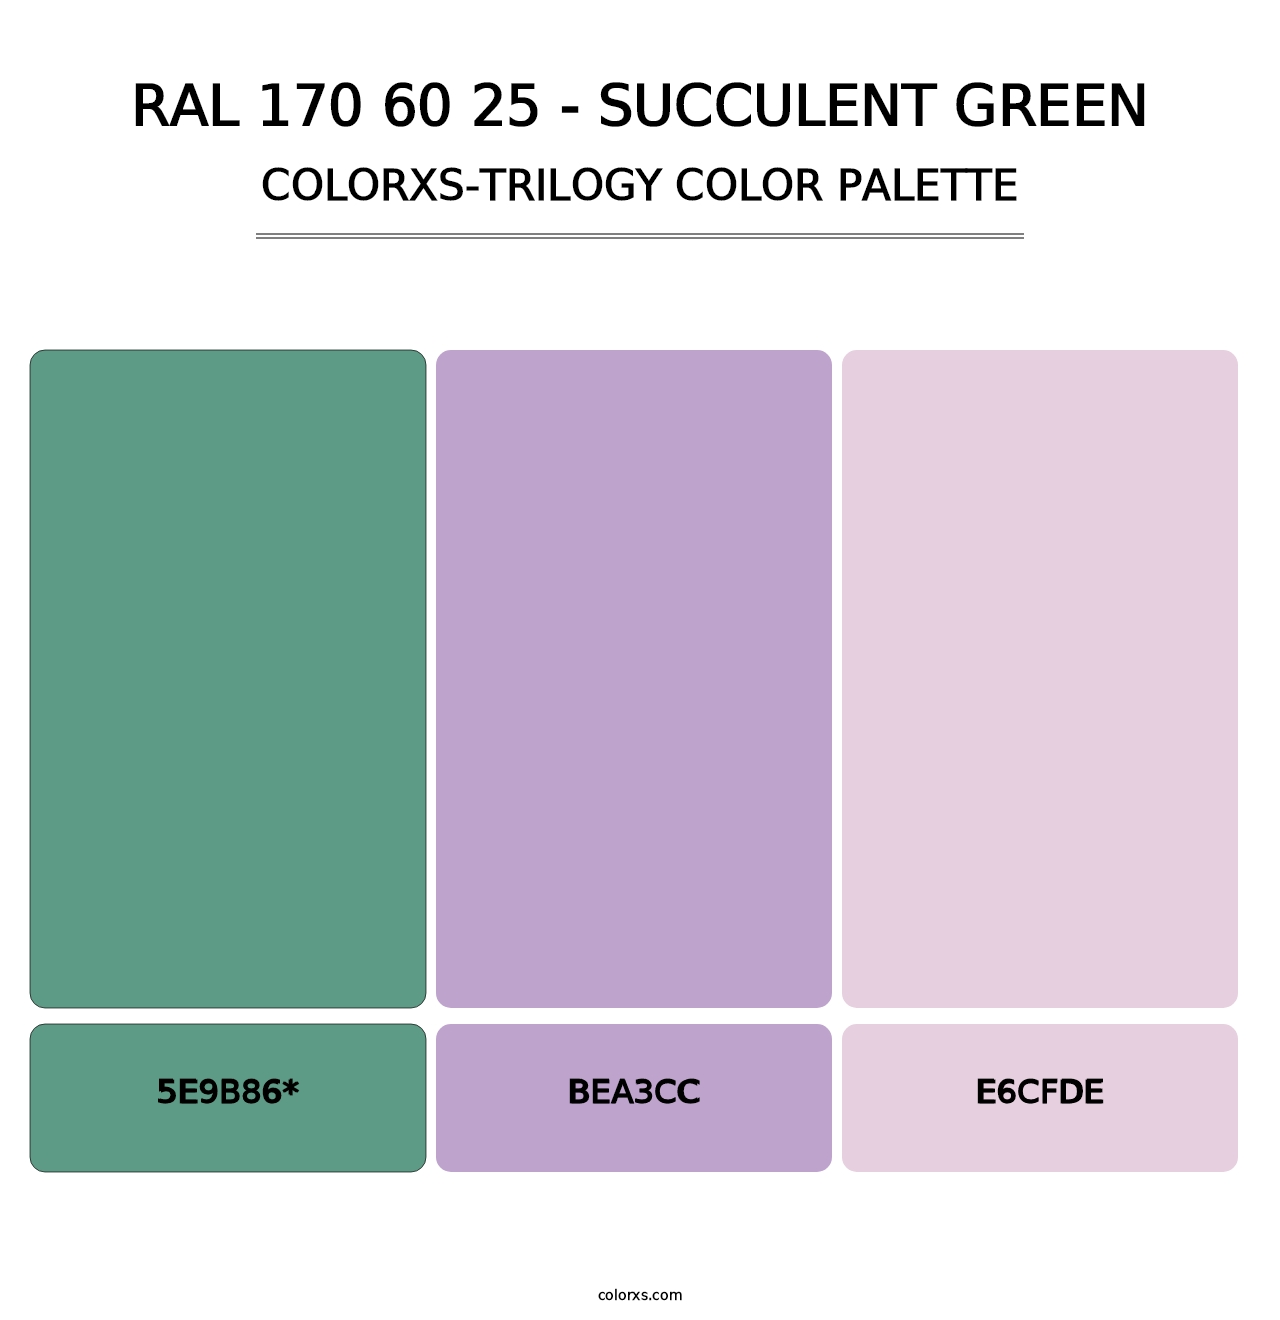 RAL 170 60 25 - Succulent Green - Colorxs Trilogy Palette